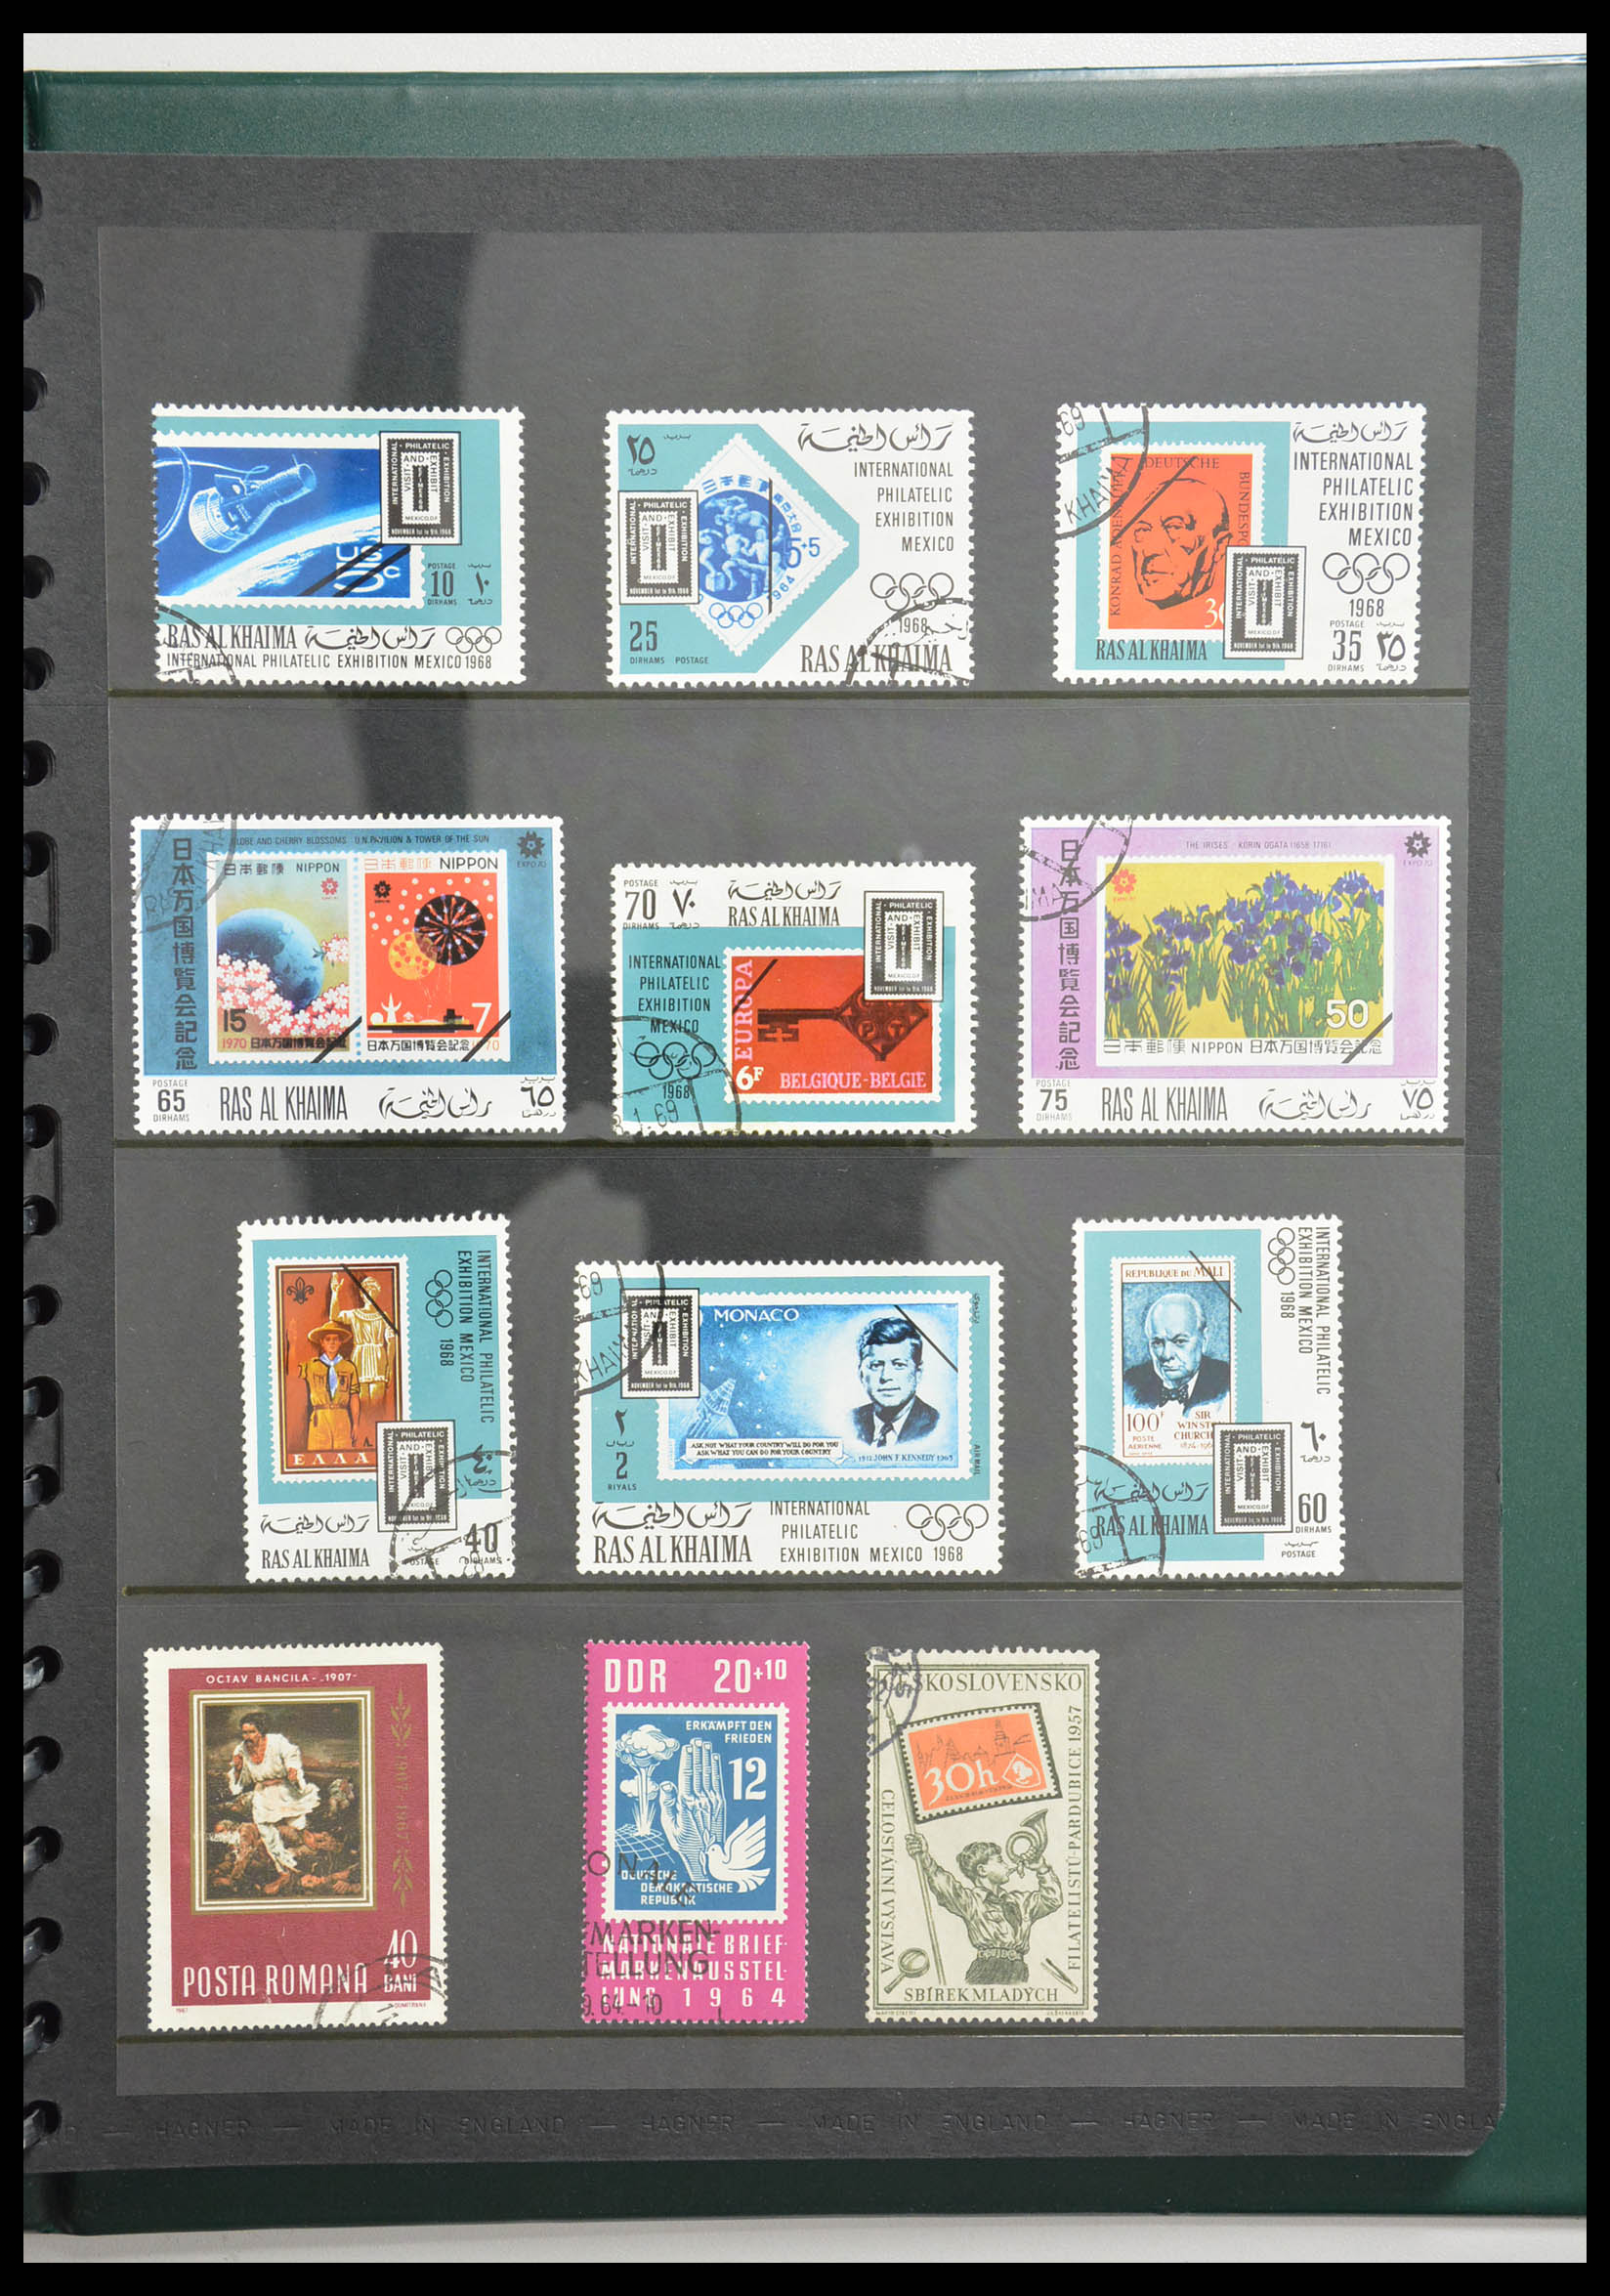 28337 075 - 28337 Postzegel op postzegel 1840-2001.